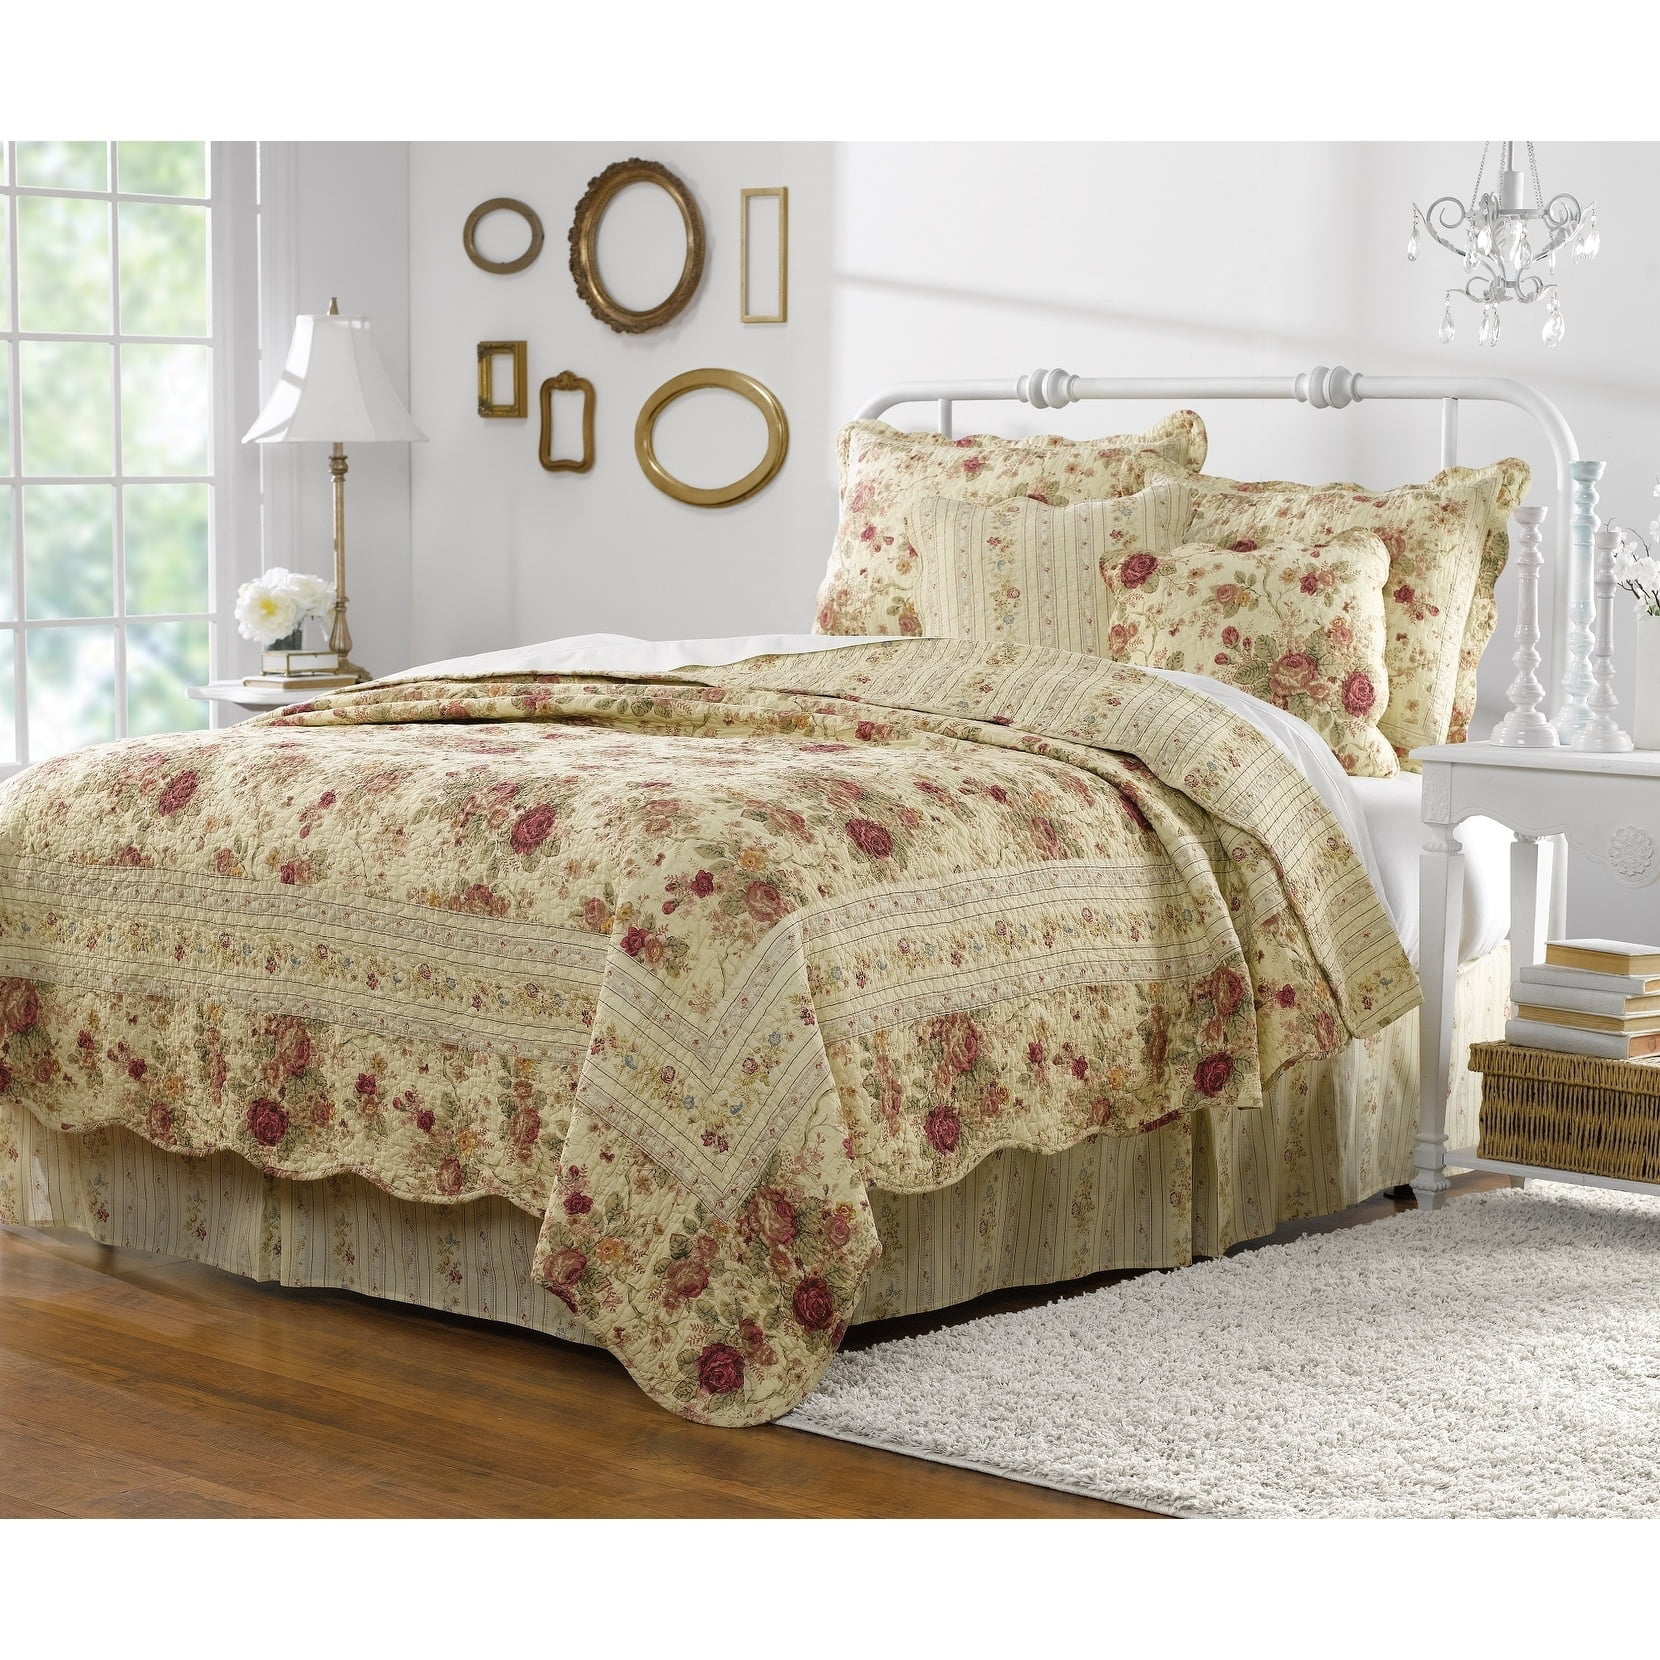 Coverlet Vintage Rose Floral 100%Cotton 3-Piece Reversible Quilt Set Bedspread 